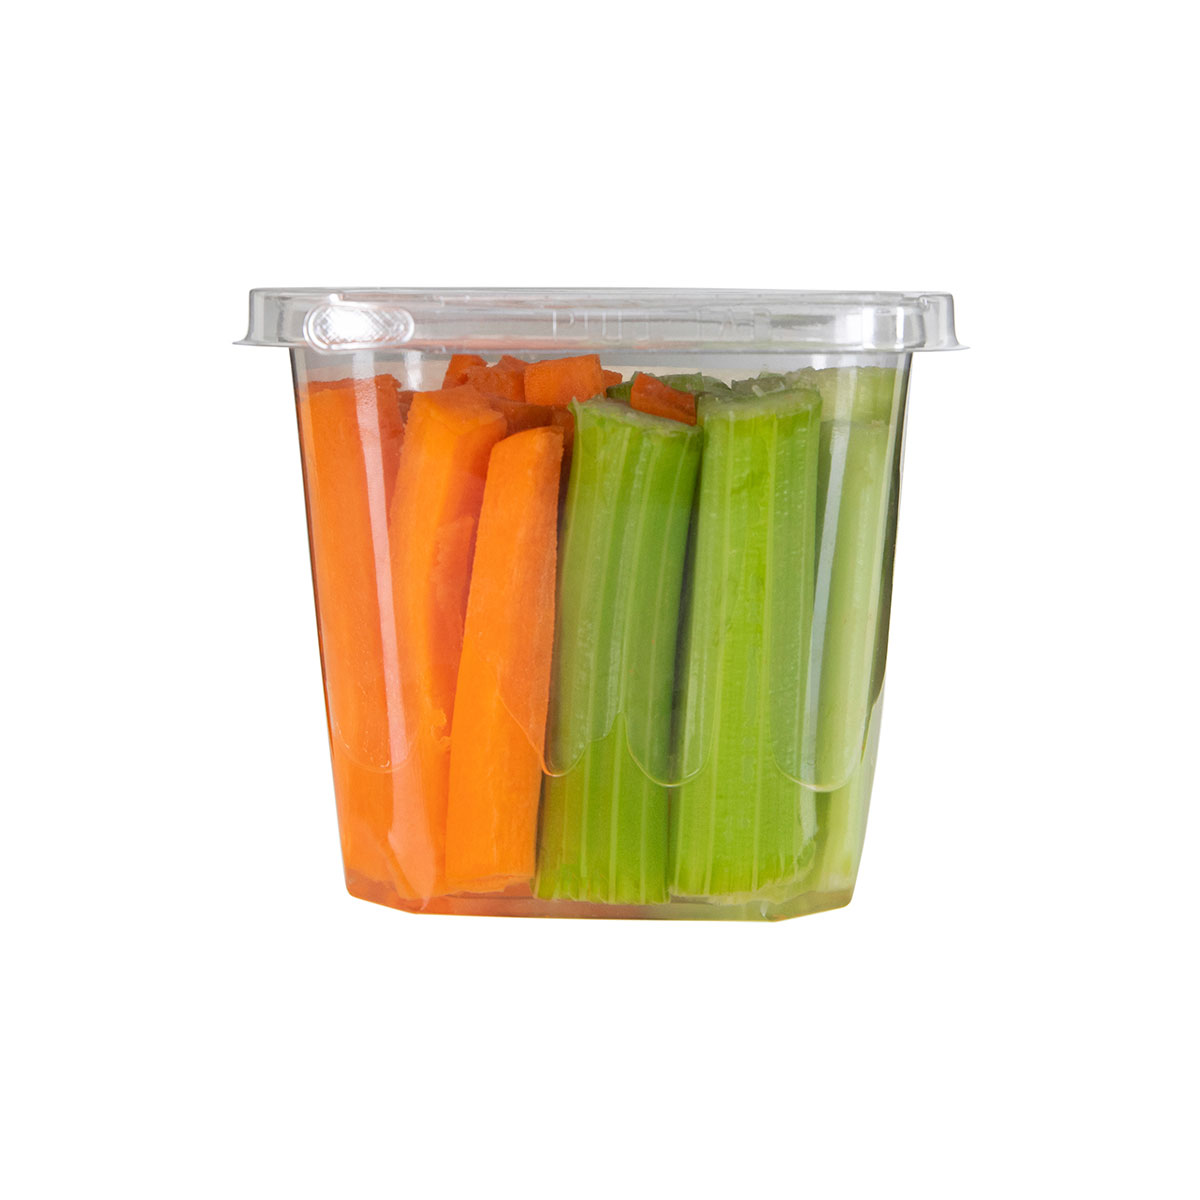 Organic Carrot/Celery Sticks | Urban Roots Organic Cut Vegetables ...